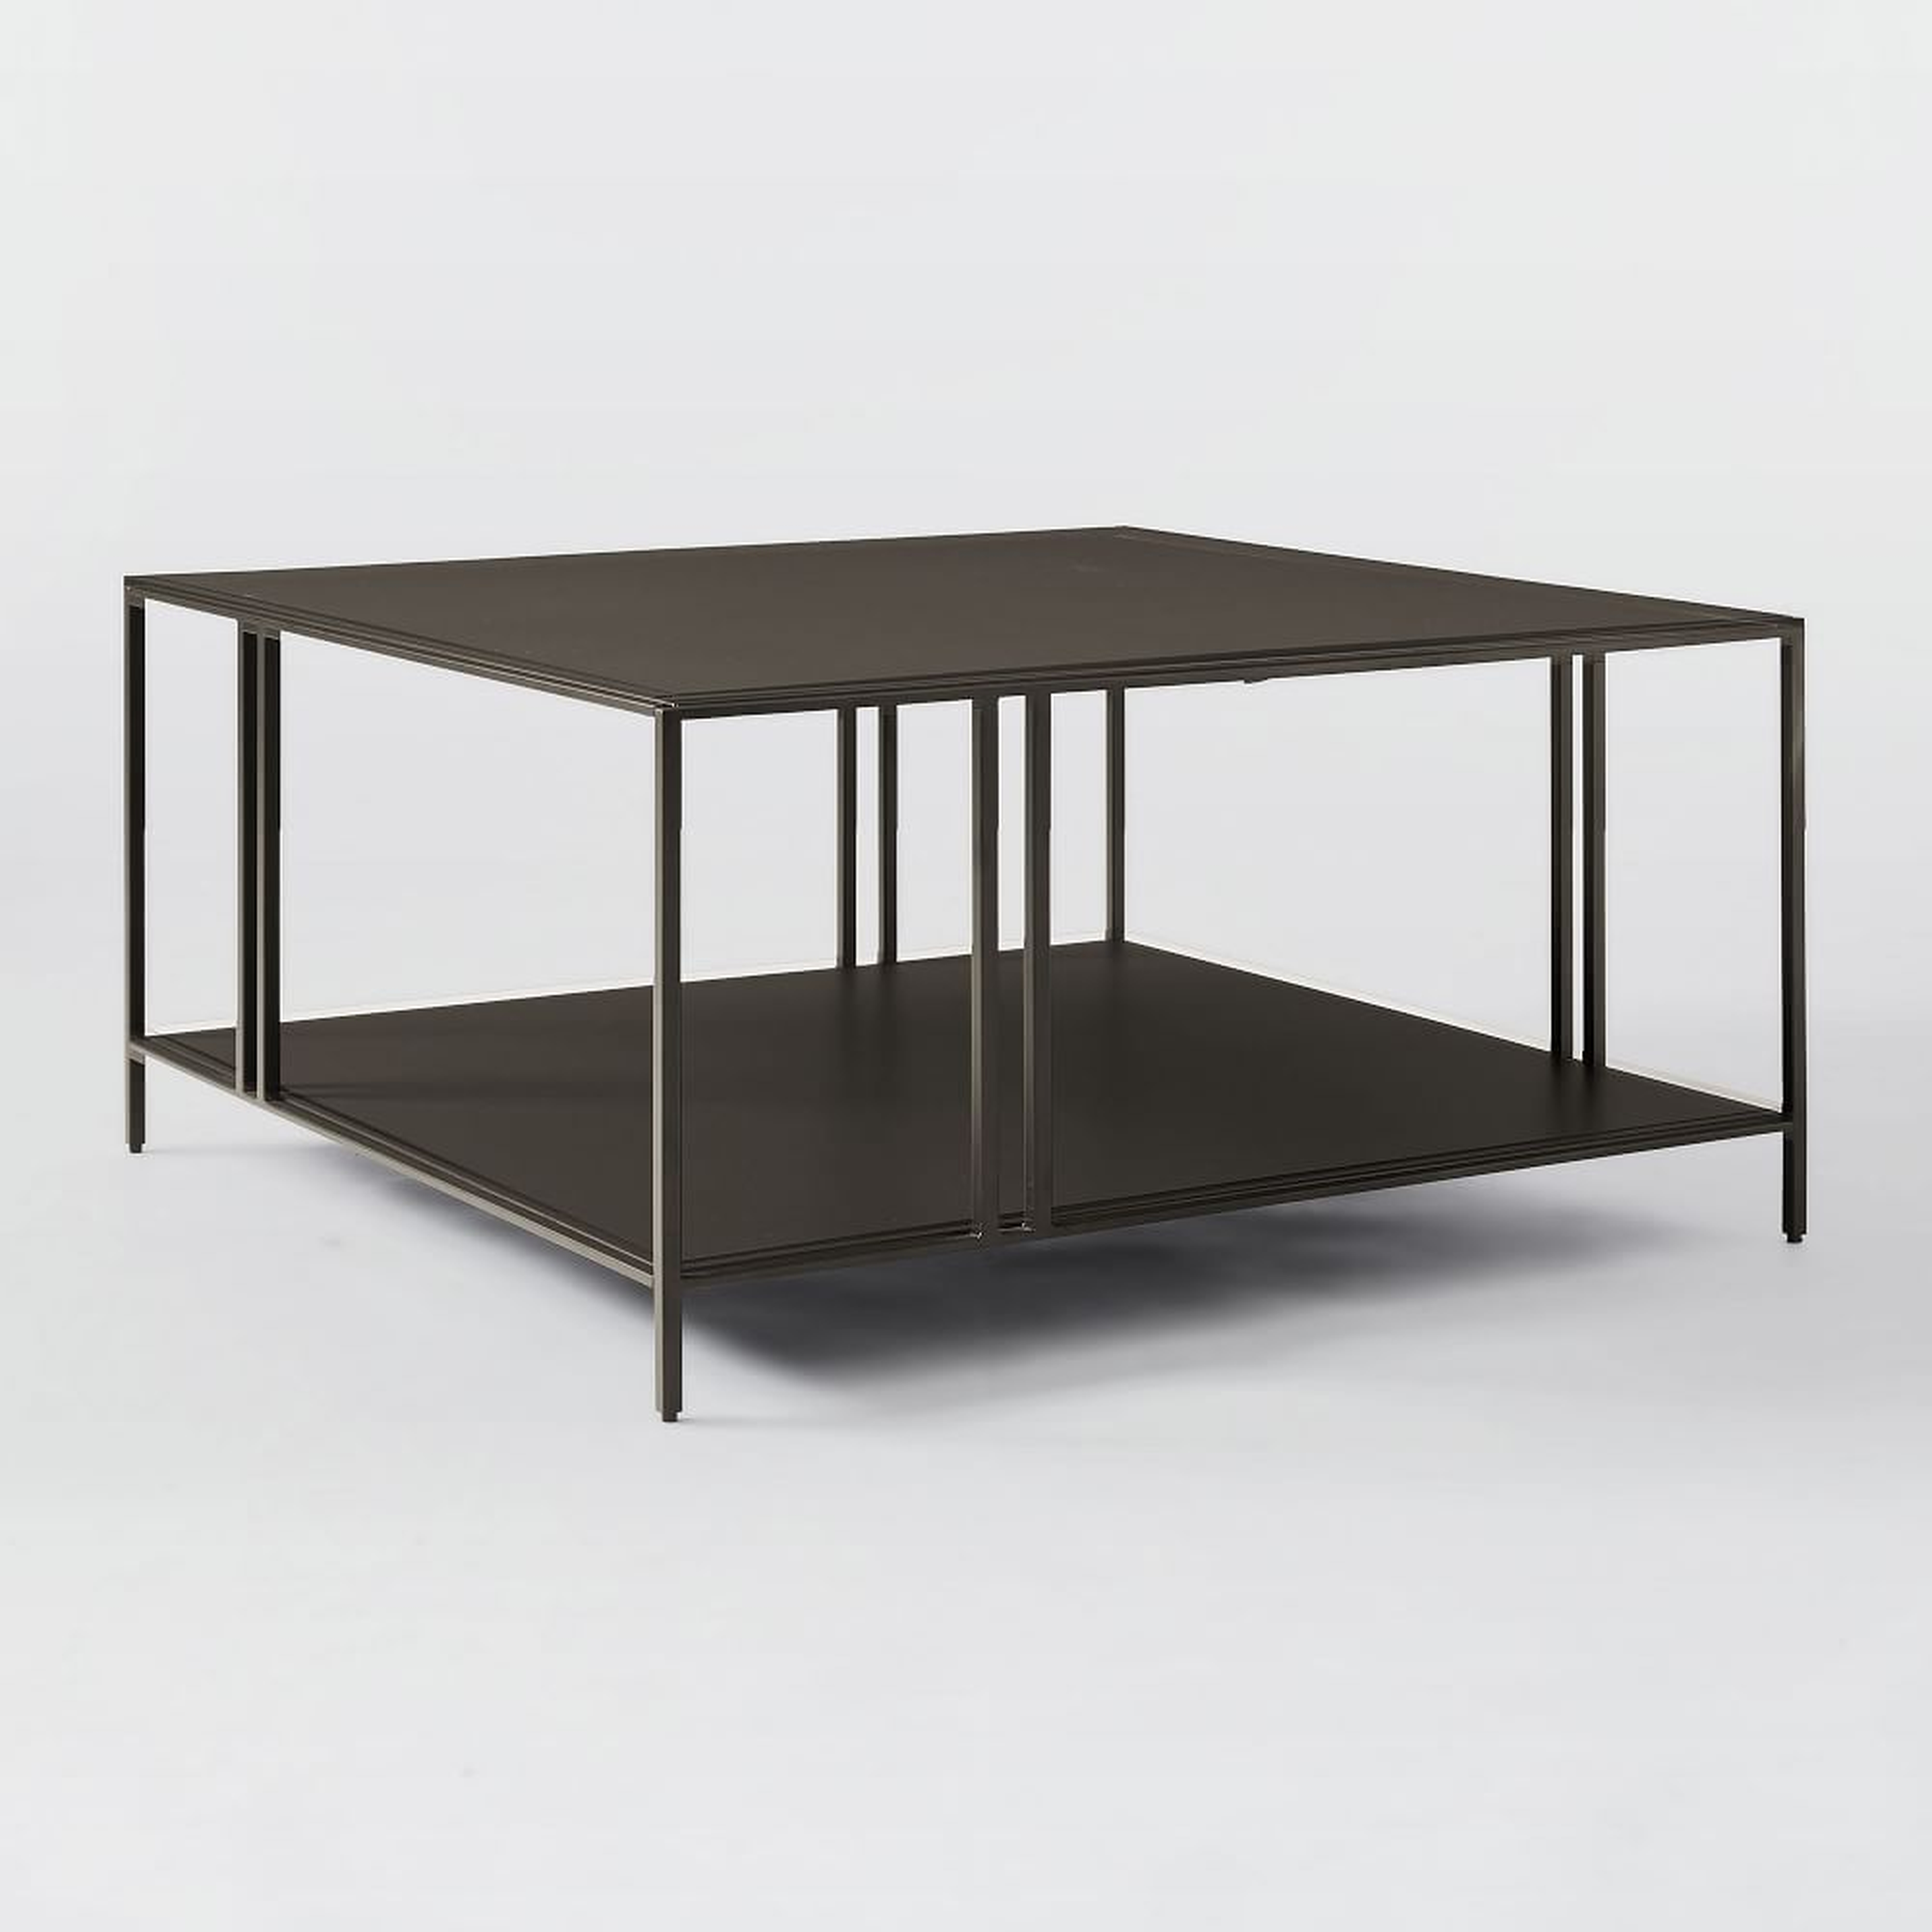 Profile 34" Sq. Coffee Table, Dark Bronze - West Elm